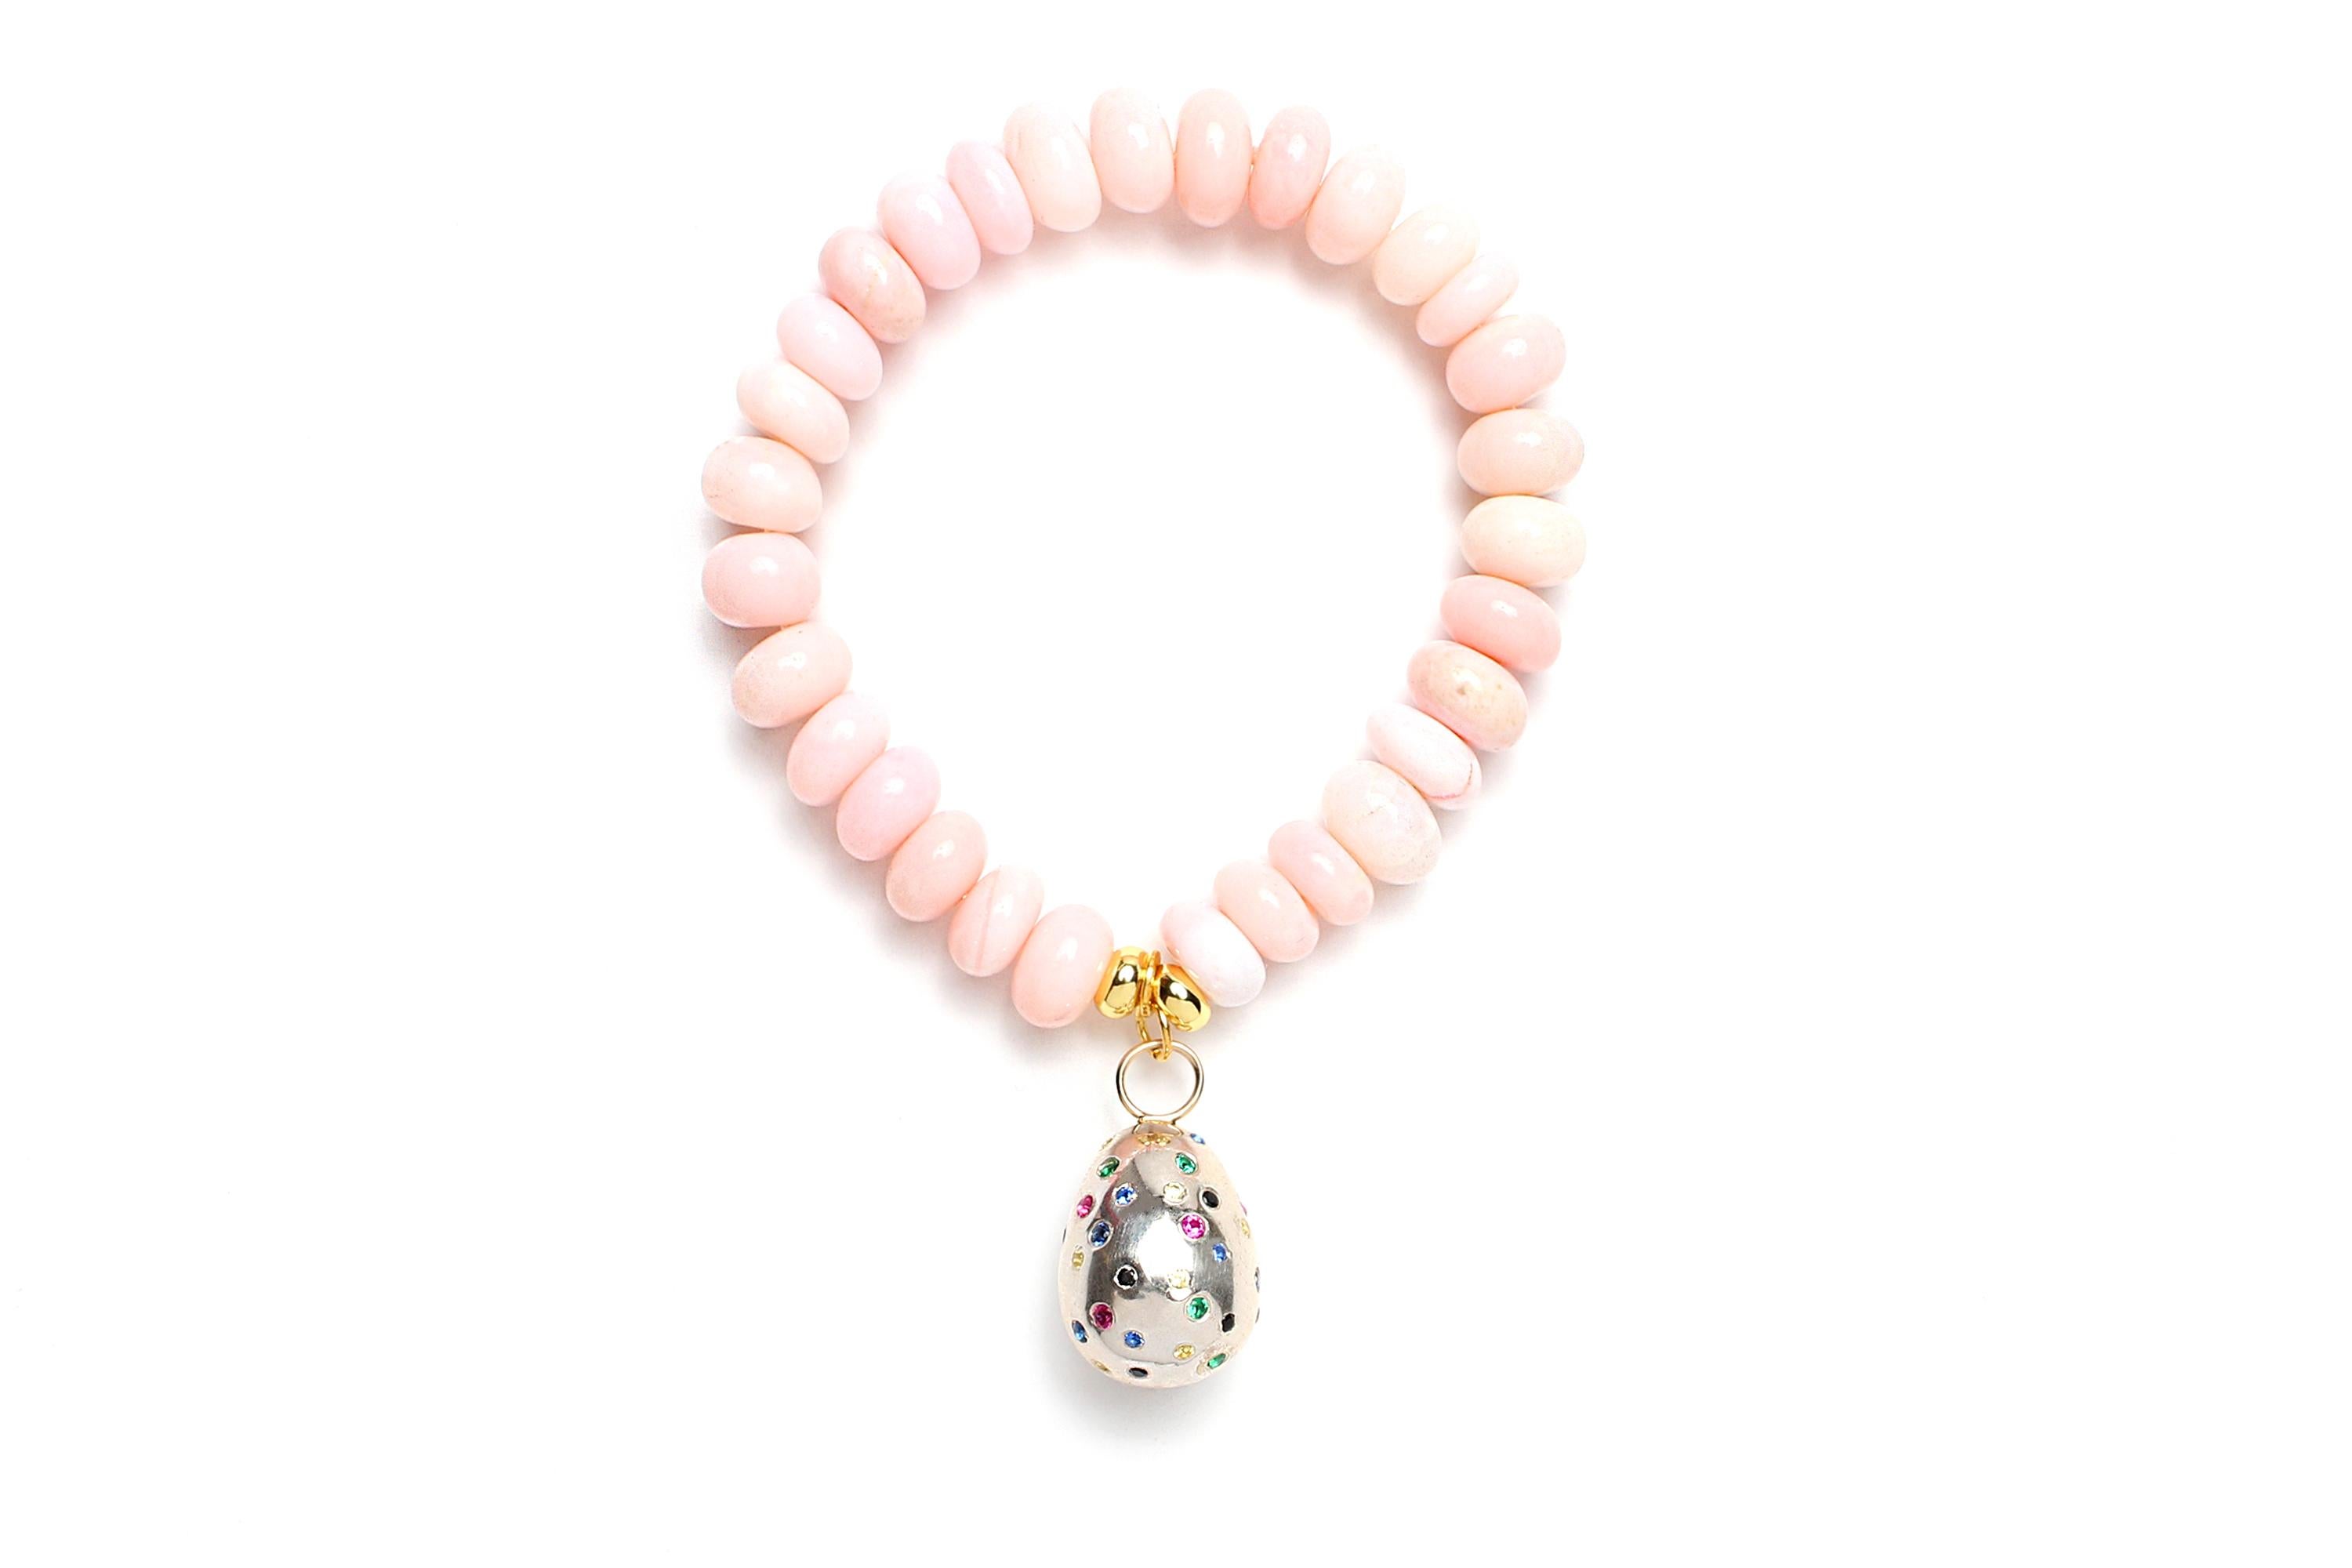 CLARISSA BRONFMAN Cotton Candy Quartz Beaded Bracelet Collection Lot Of 5 For Sale 8